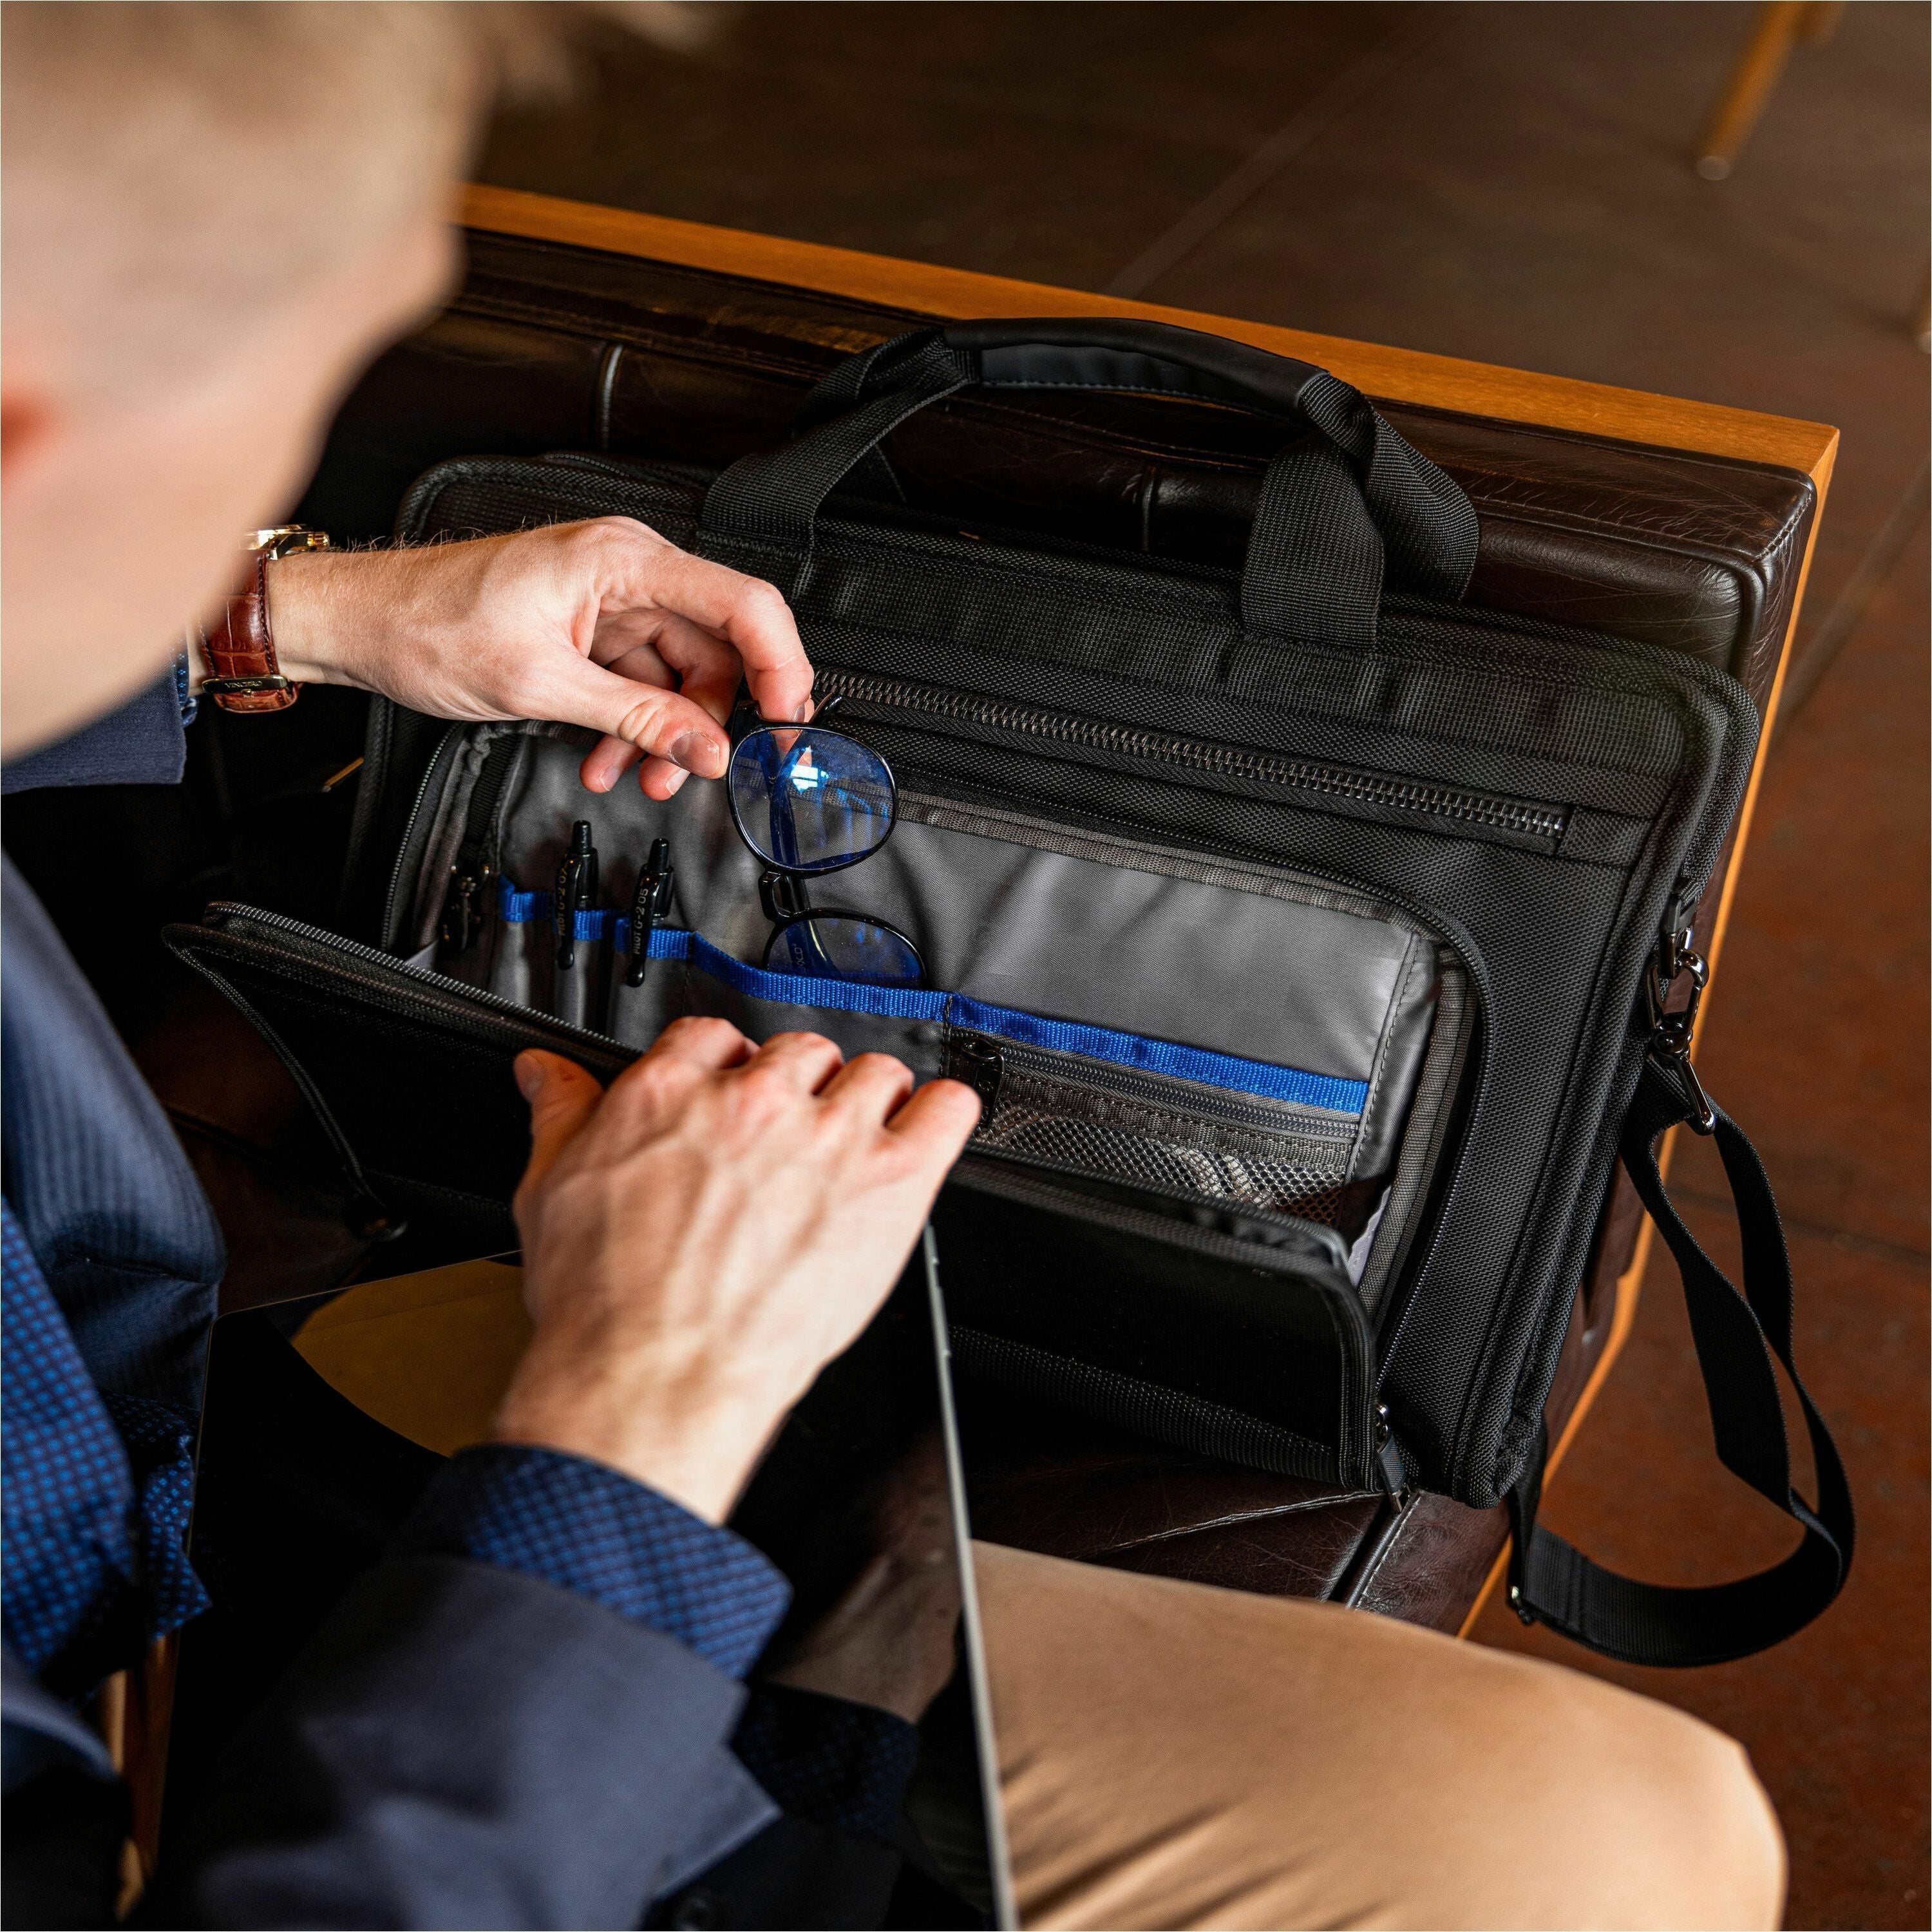 Samsonite Carrying Case (Briefcase) for 15.6" Notebook, Tablet, Smartphone - Black - 1680D Polyester, Ethylene Vinyl Acetate (EVA) Body - Fleece Interior Material - Handle, Carrying Strap